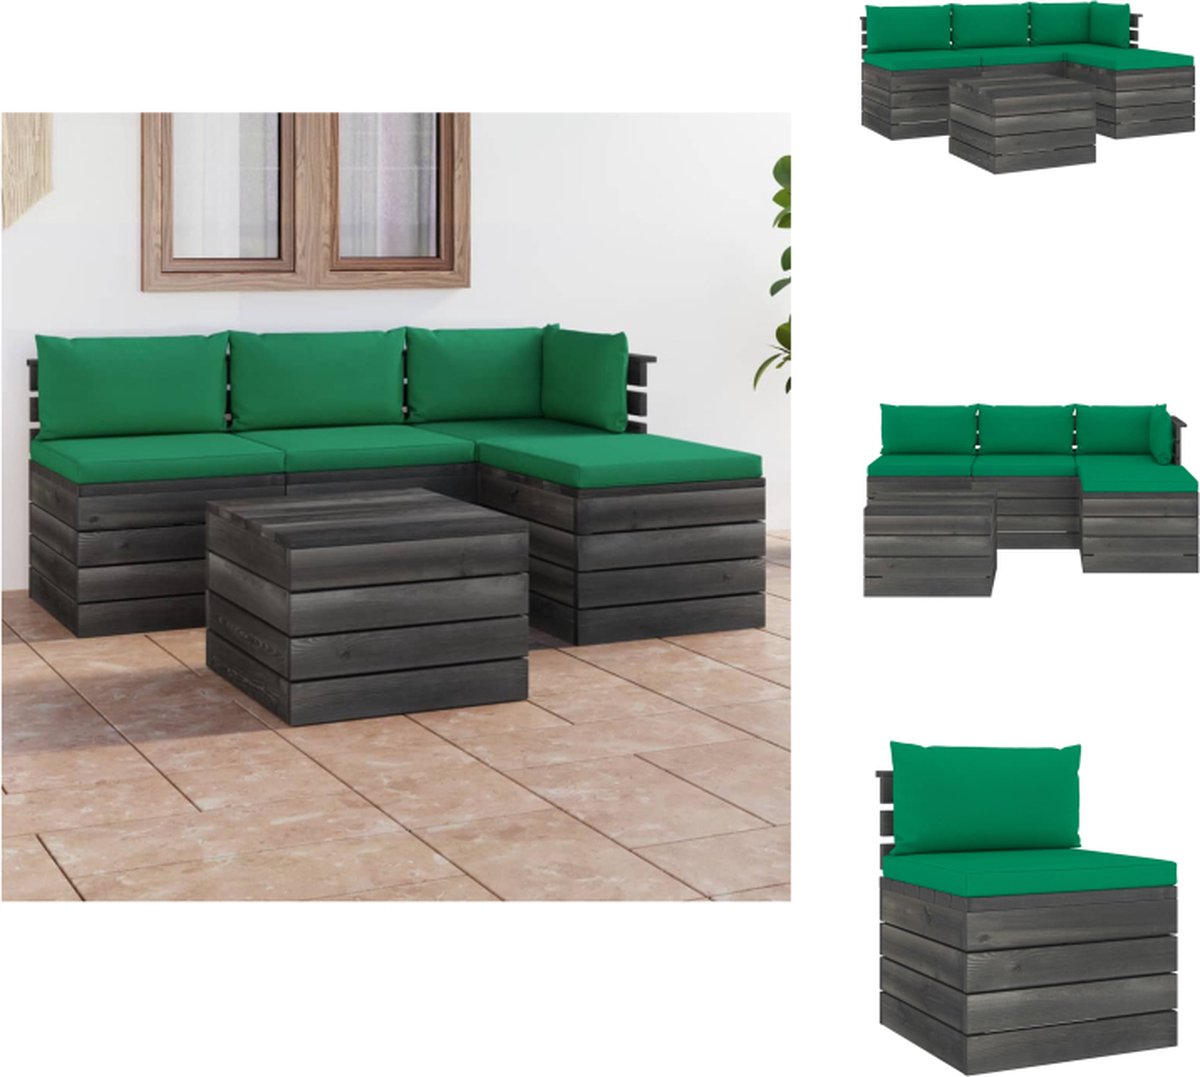 VidaXL Pallet Loungeset grenenhout modulair groen kussen 2 middenbanken 1 hoekbank 1 tafel 1 hocker Tuinset